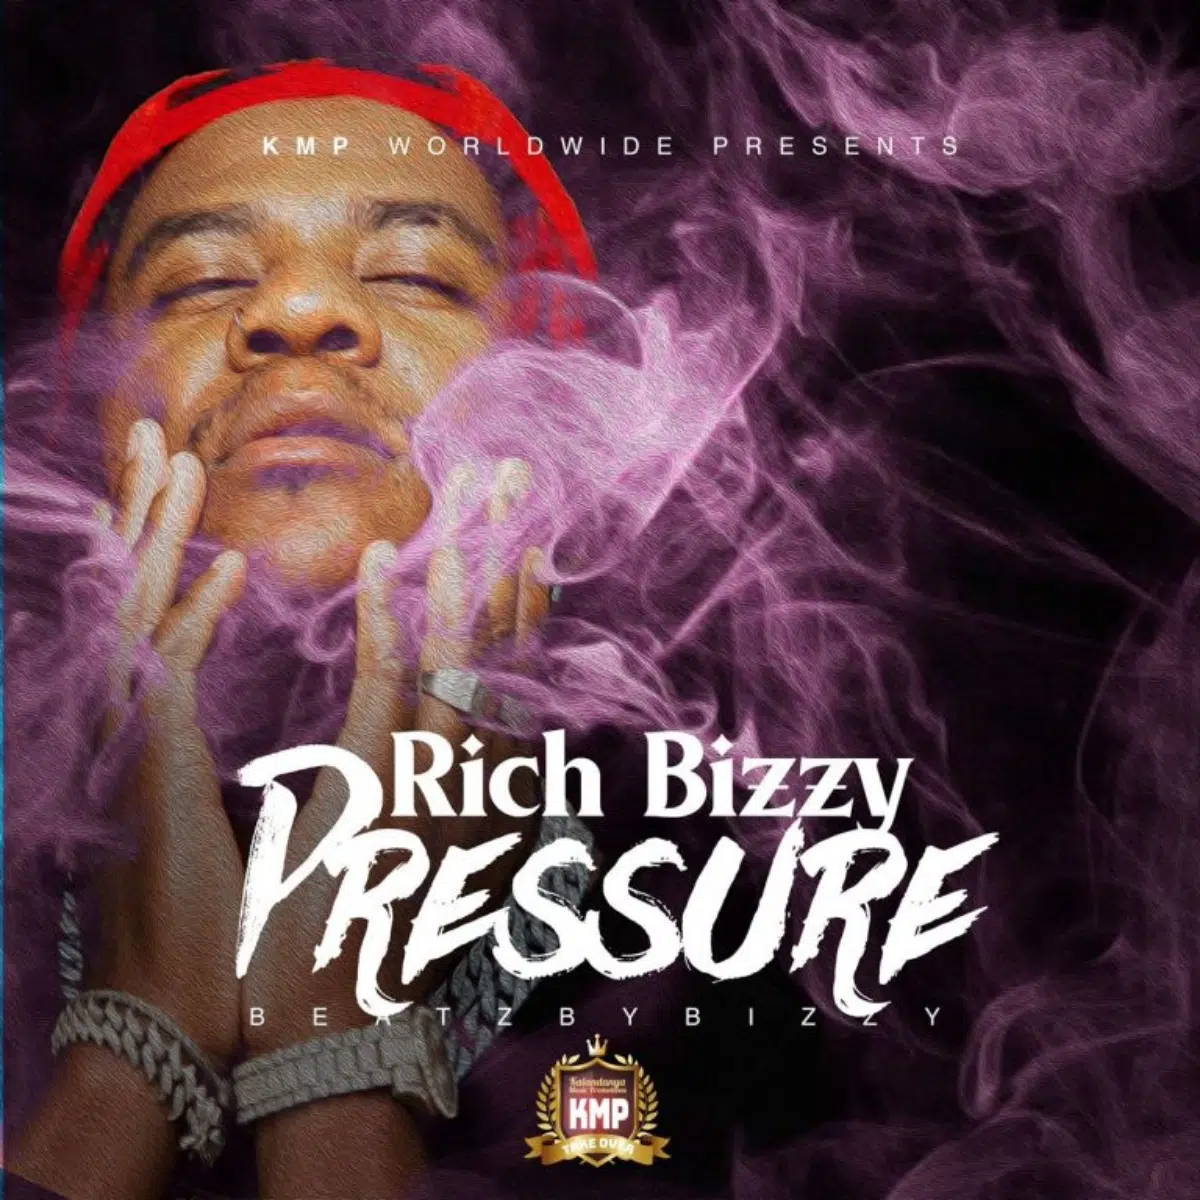 DOWNLOAD: Rich Bizzy – “Pressure” Mp3